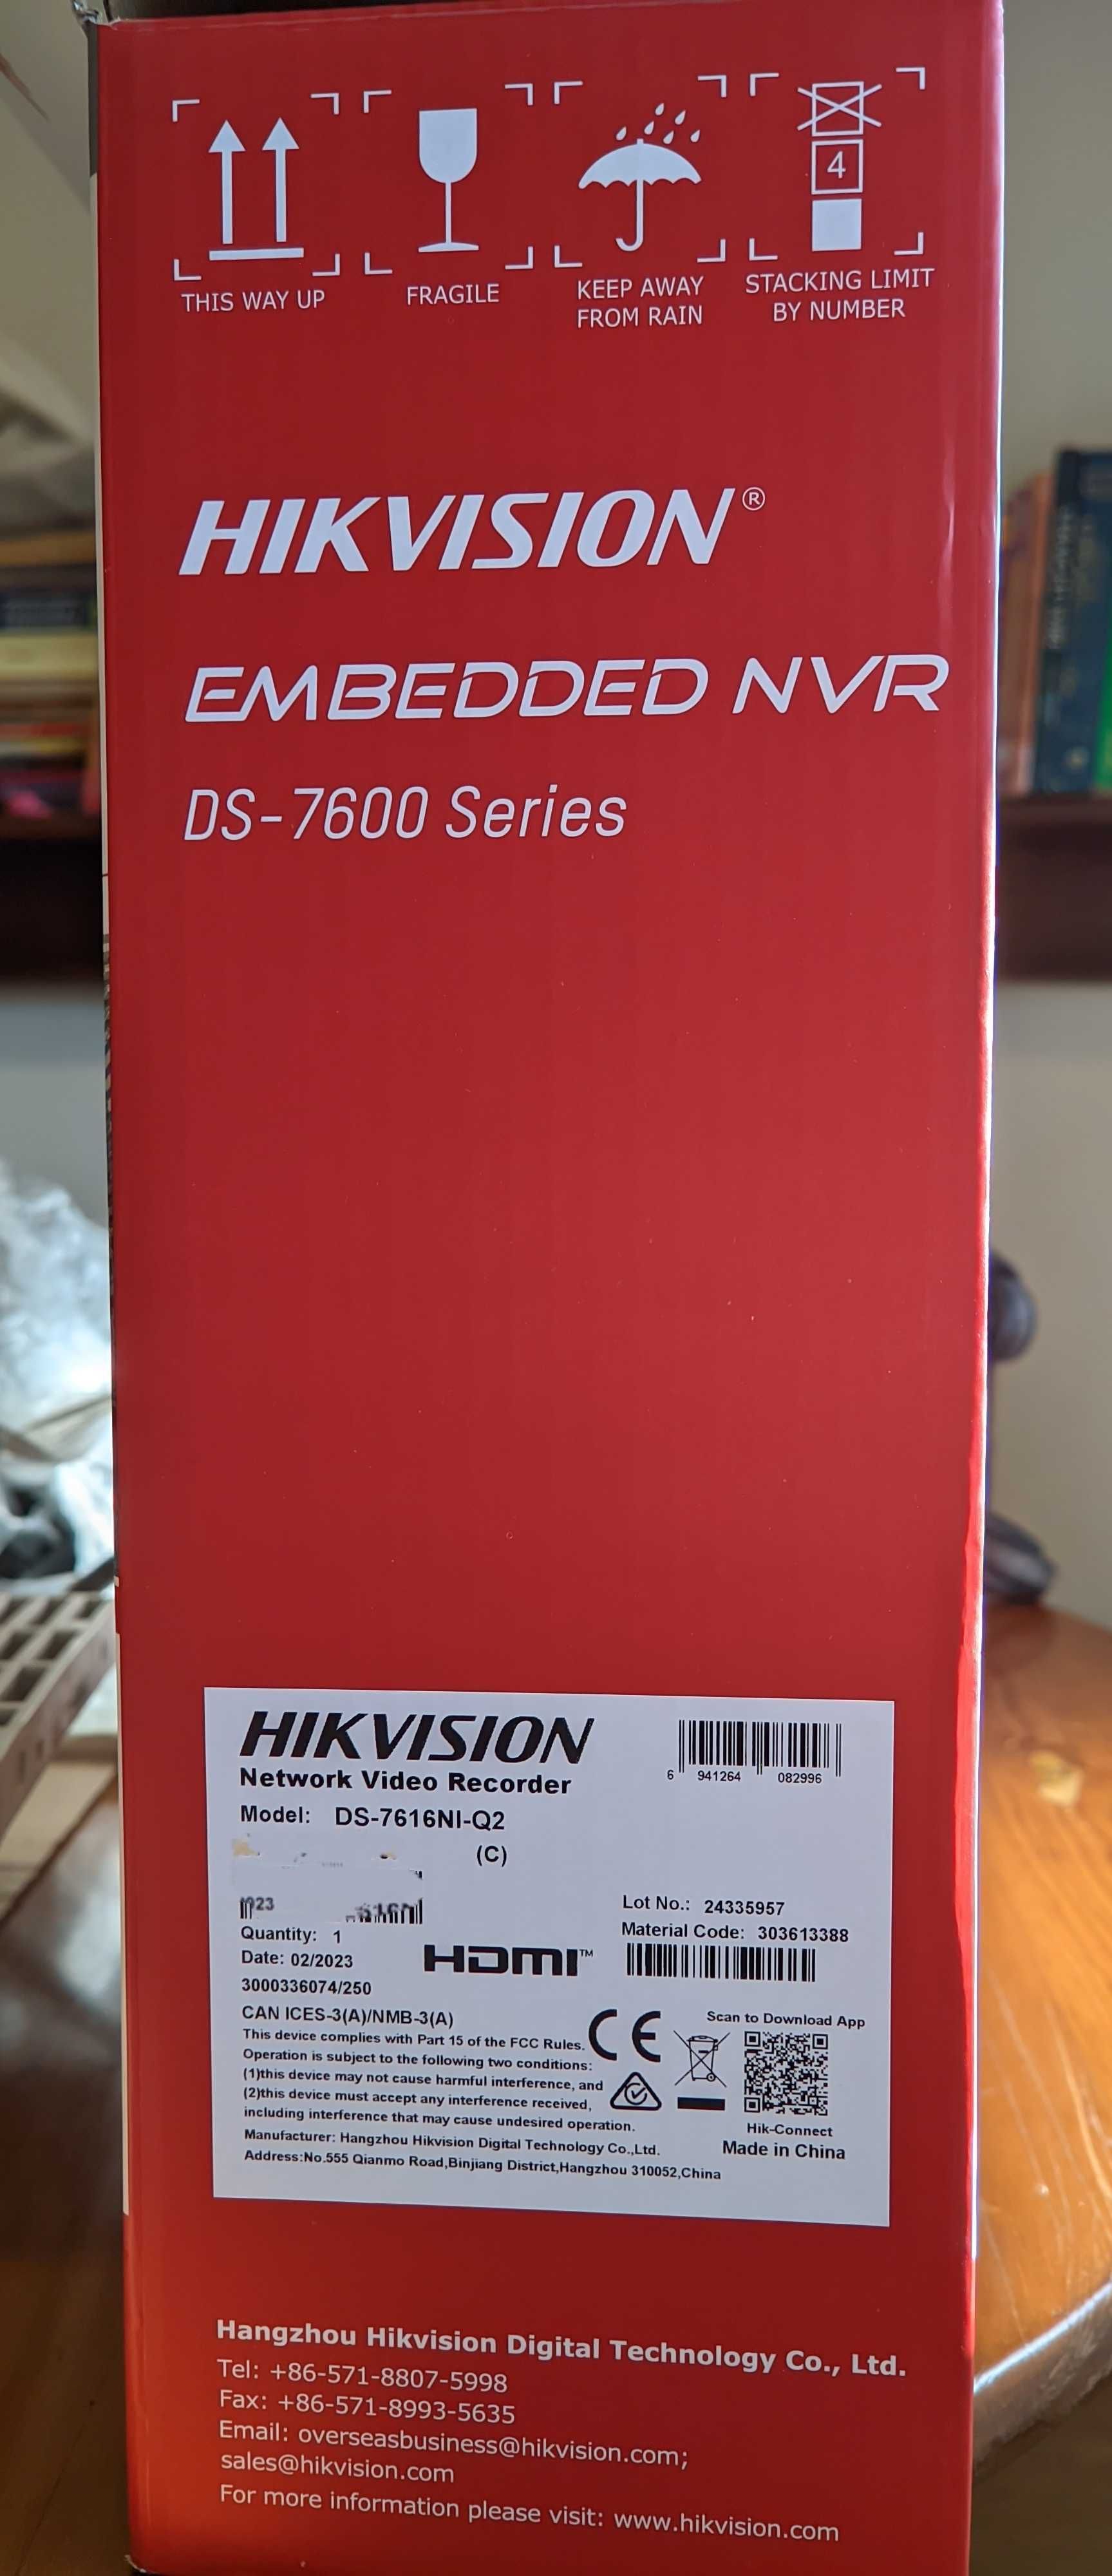 Hikvision NVR DS-7600